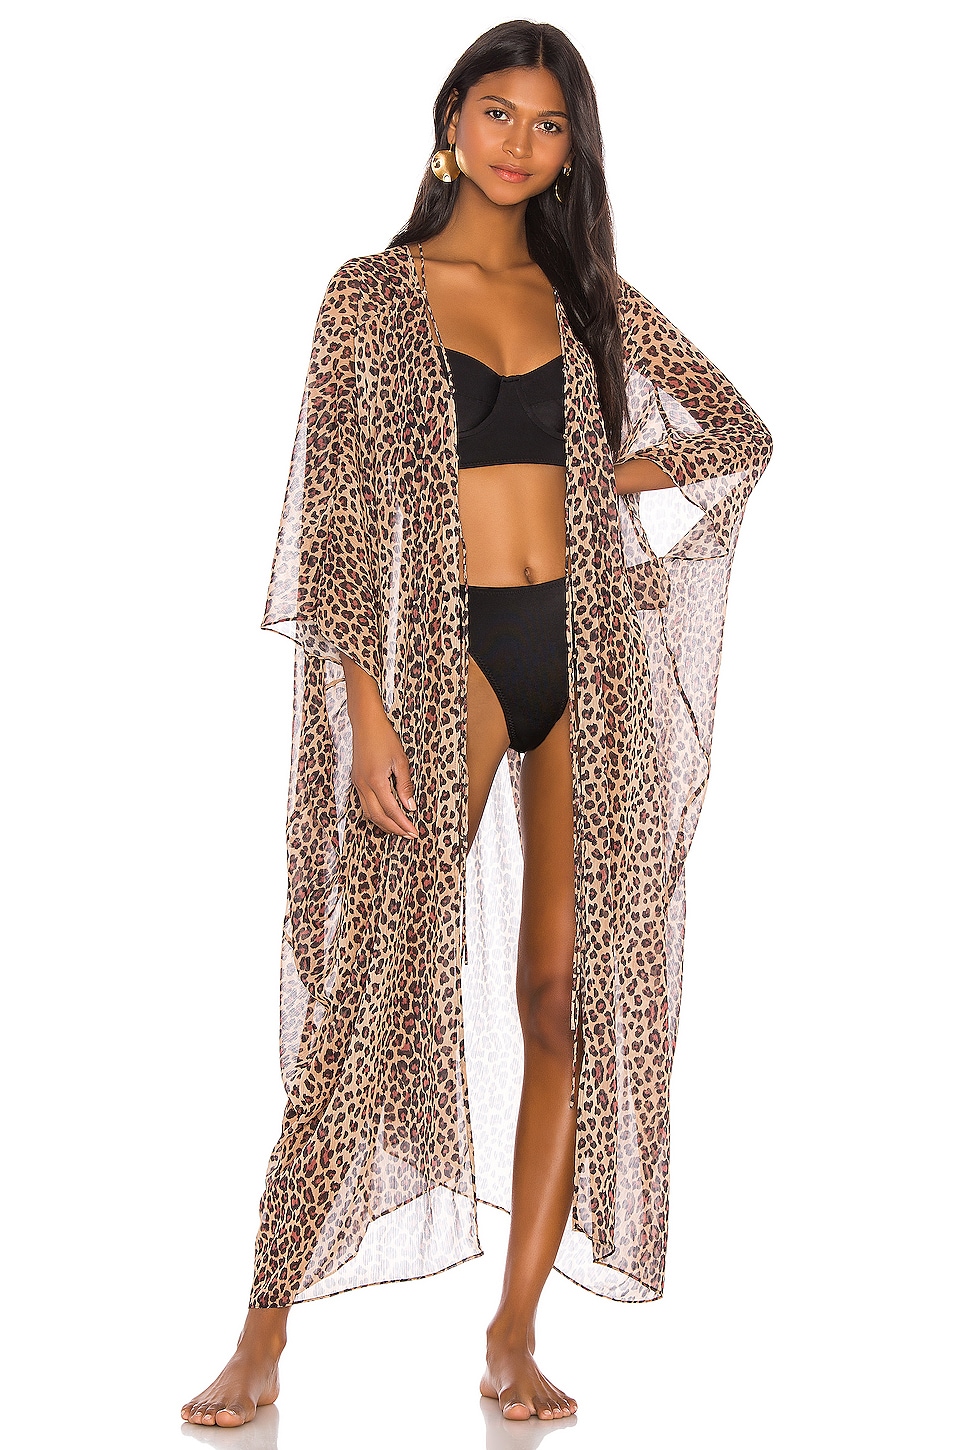 jonathan simkhai leopard dress